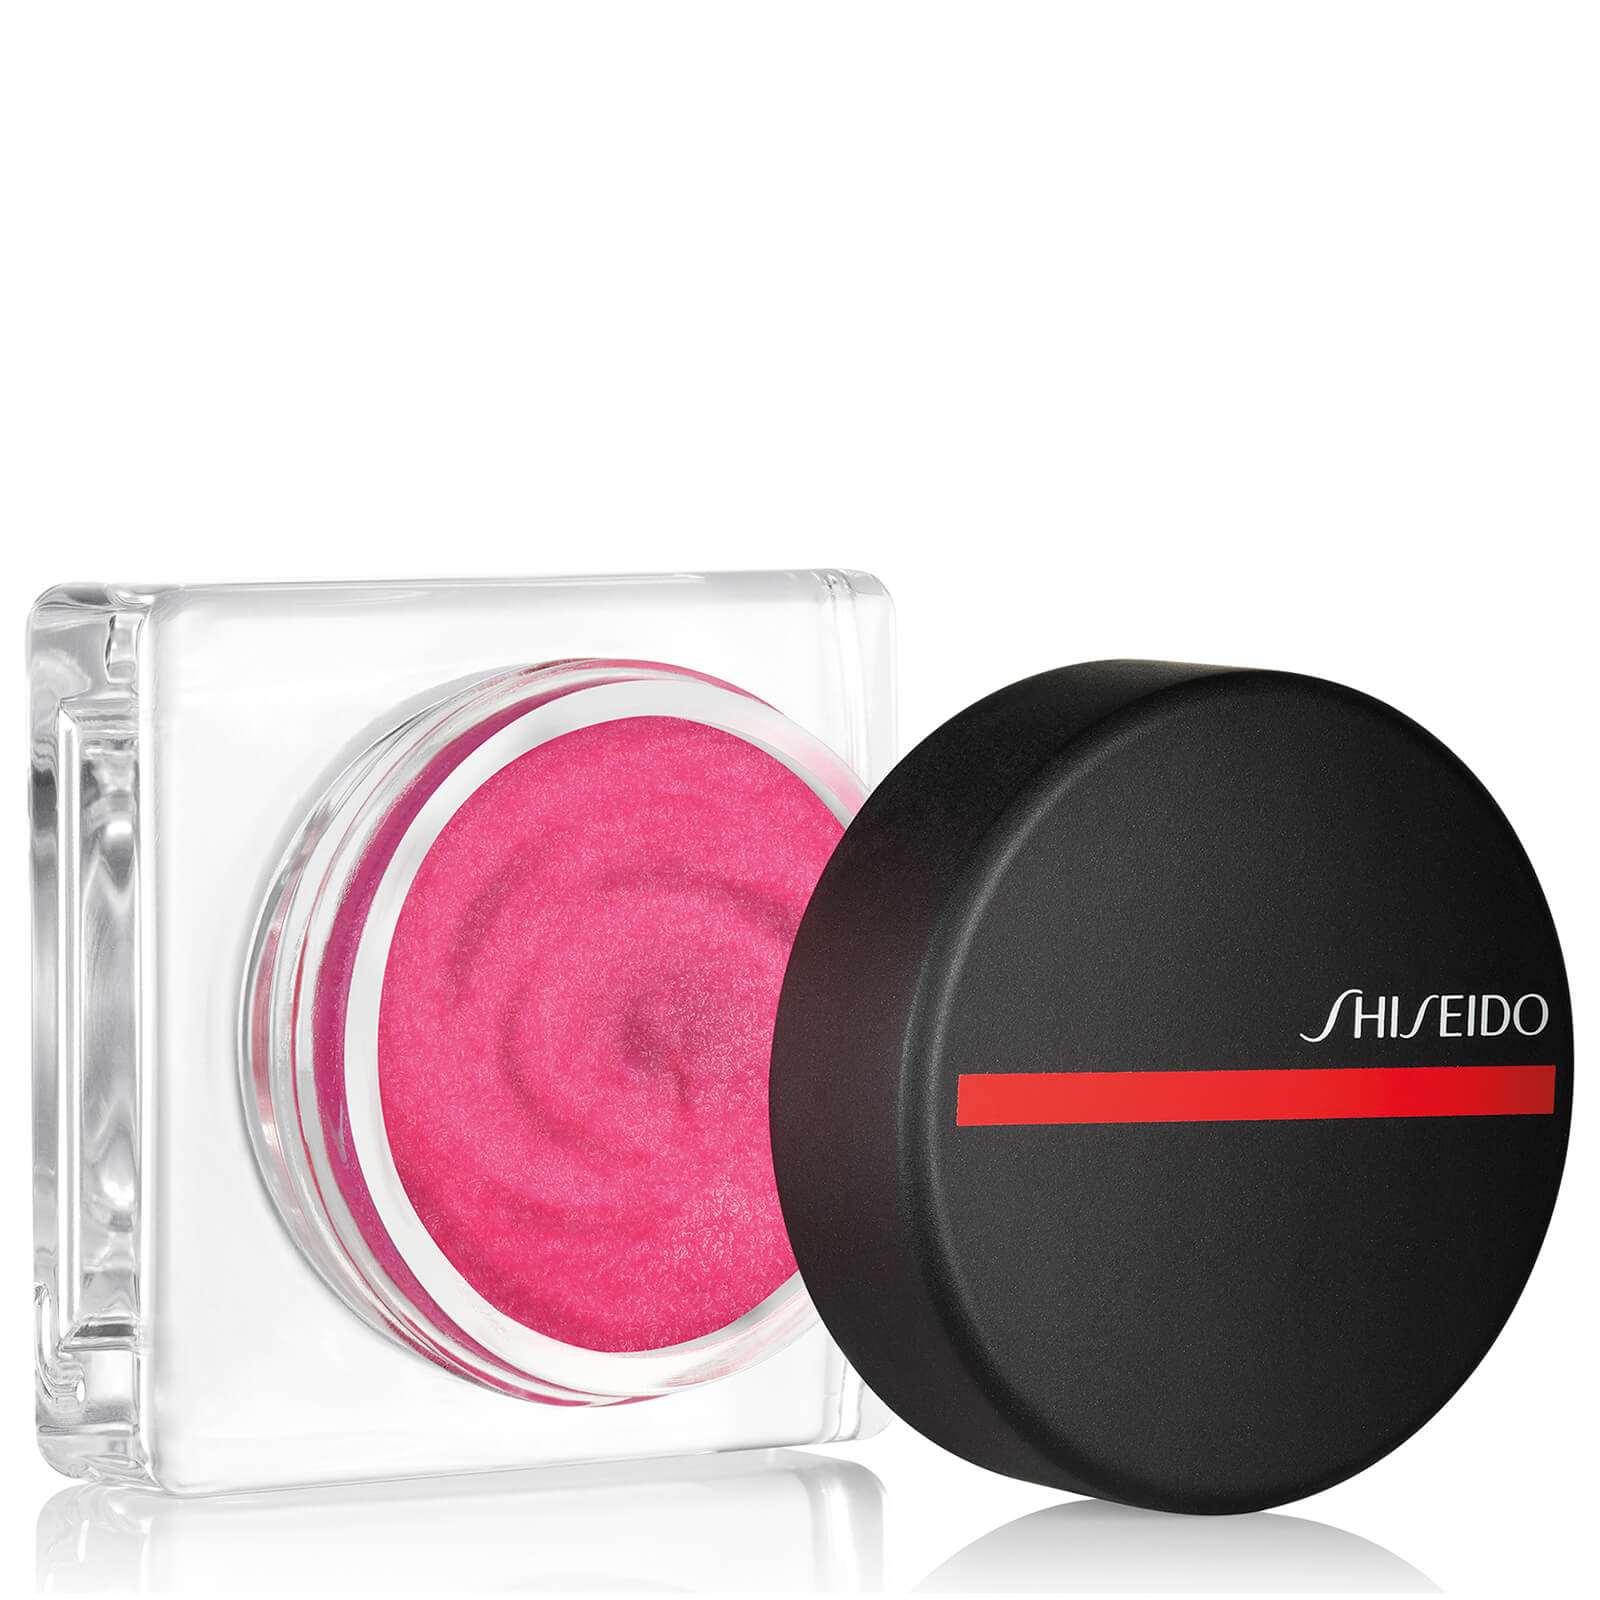 Shiseido Minimalist Whipped Powder Blush (Various Shades) - Blush Kokei 08